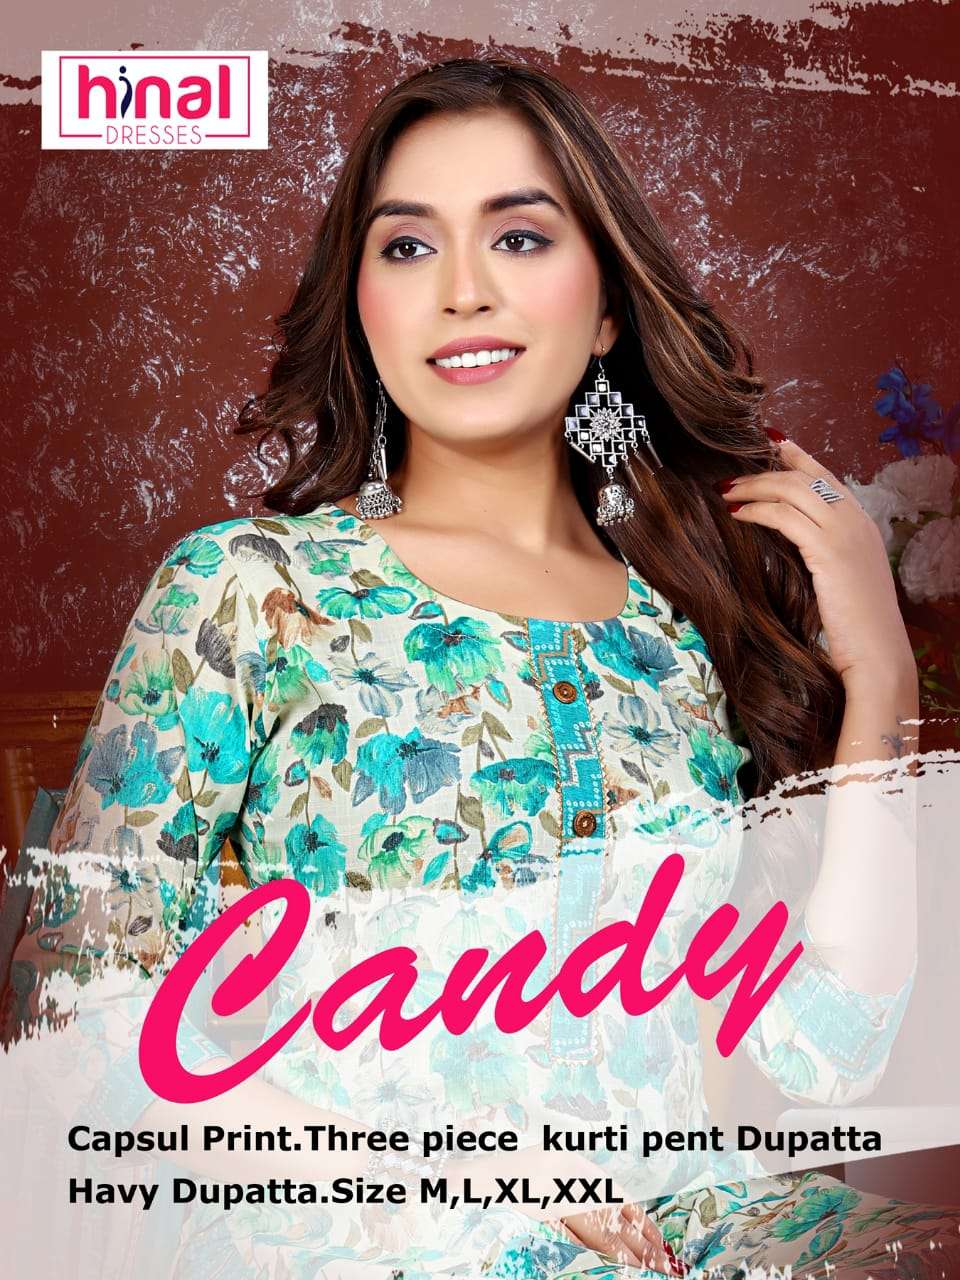 Hinal Candy Exclusive Capsule Print Kurti Pant Dupatta Set Wholesaler